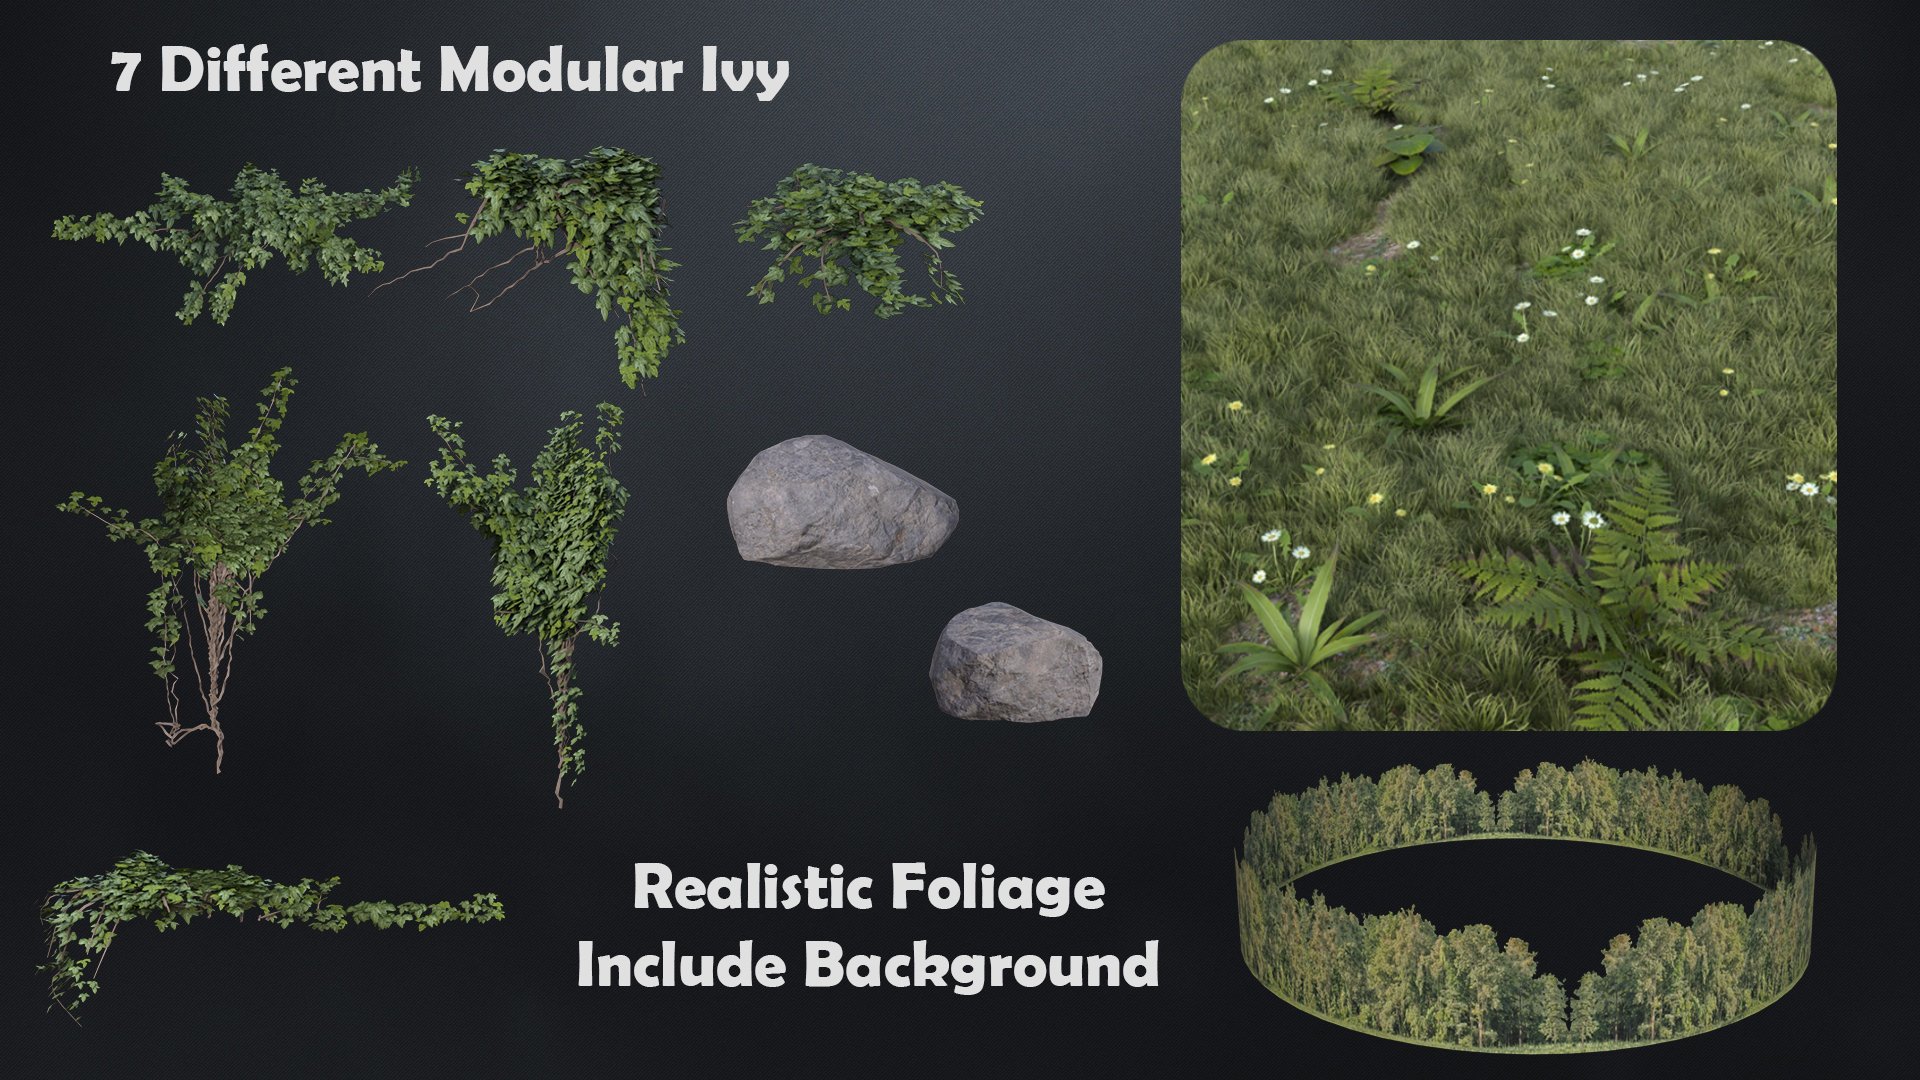 Medieval Ruin - Modular by: 3dLab, 3D Models by Daz 3D